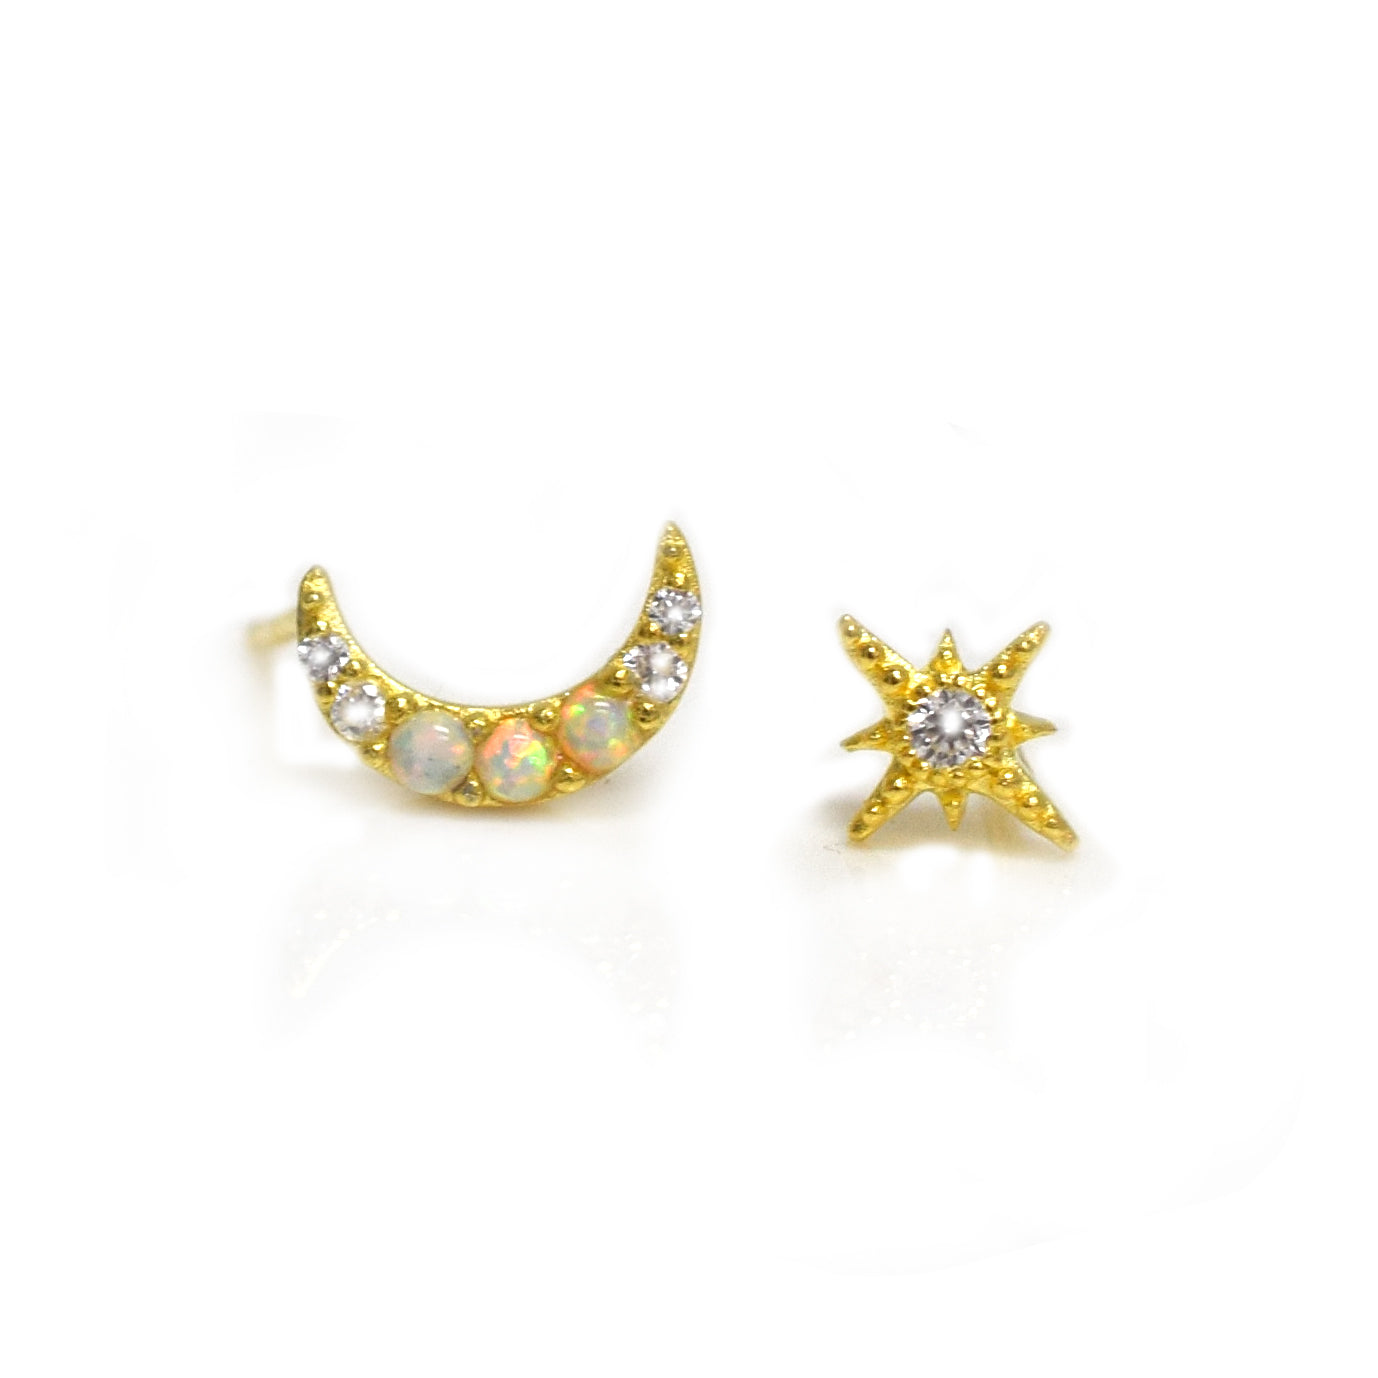 Fine Contemporary Earrings for Sale - Moonstone, Opal & More - La Kaiser